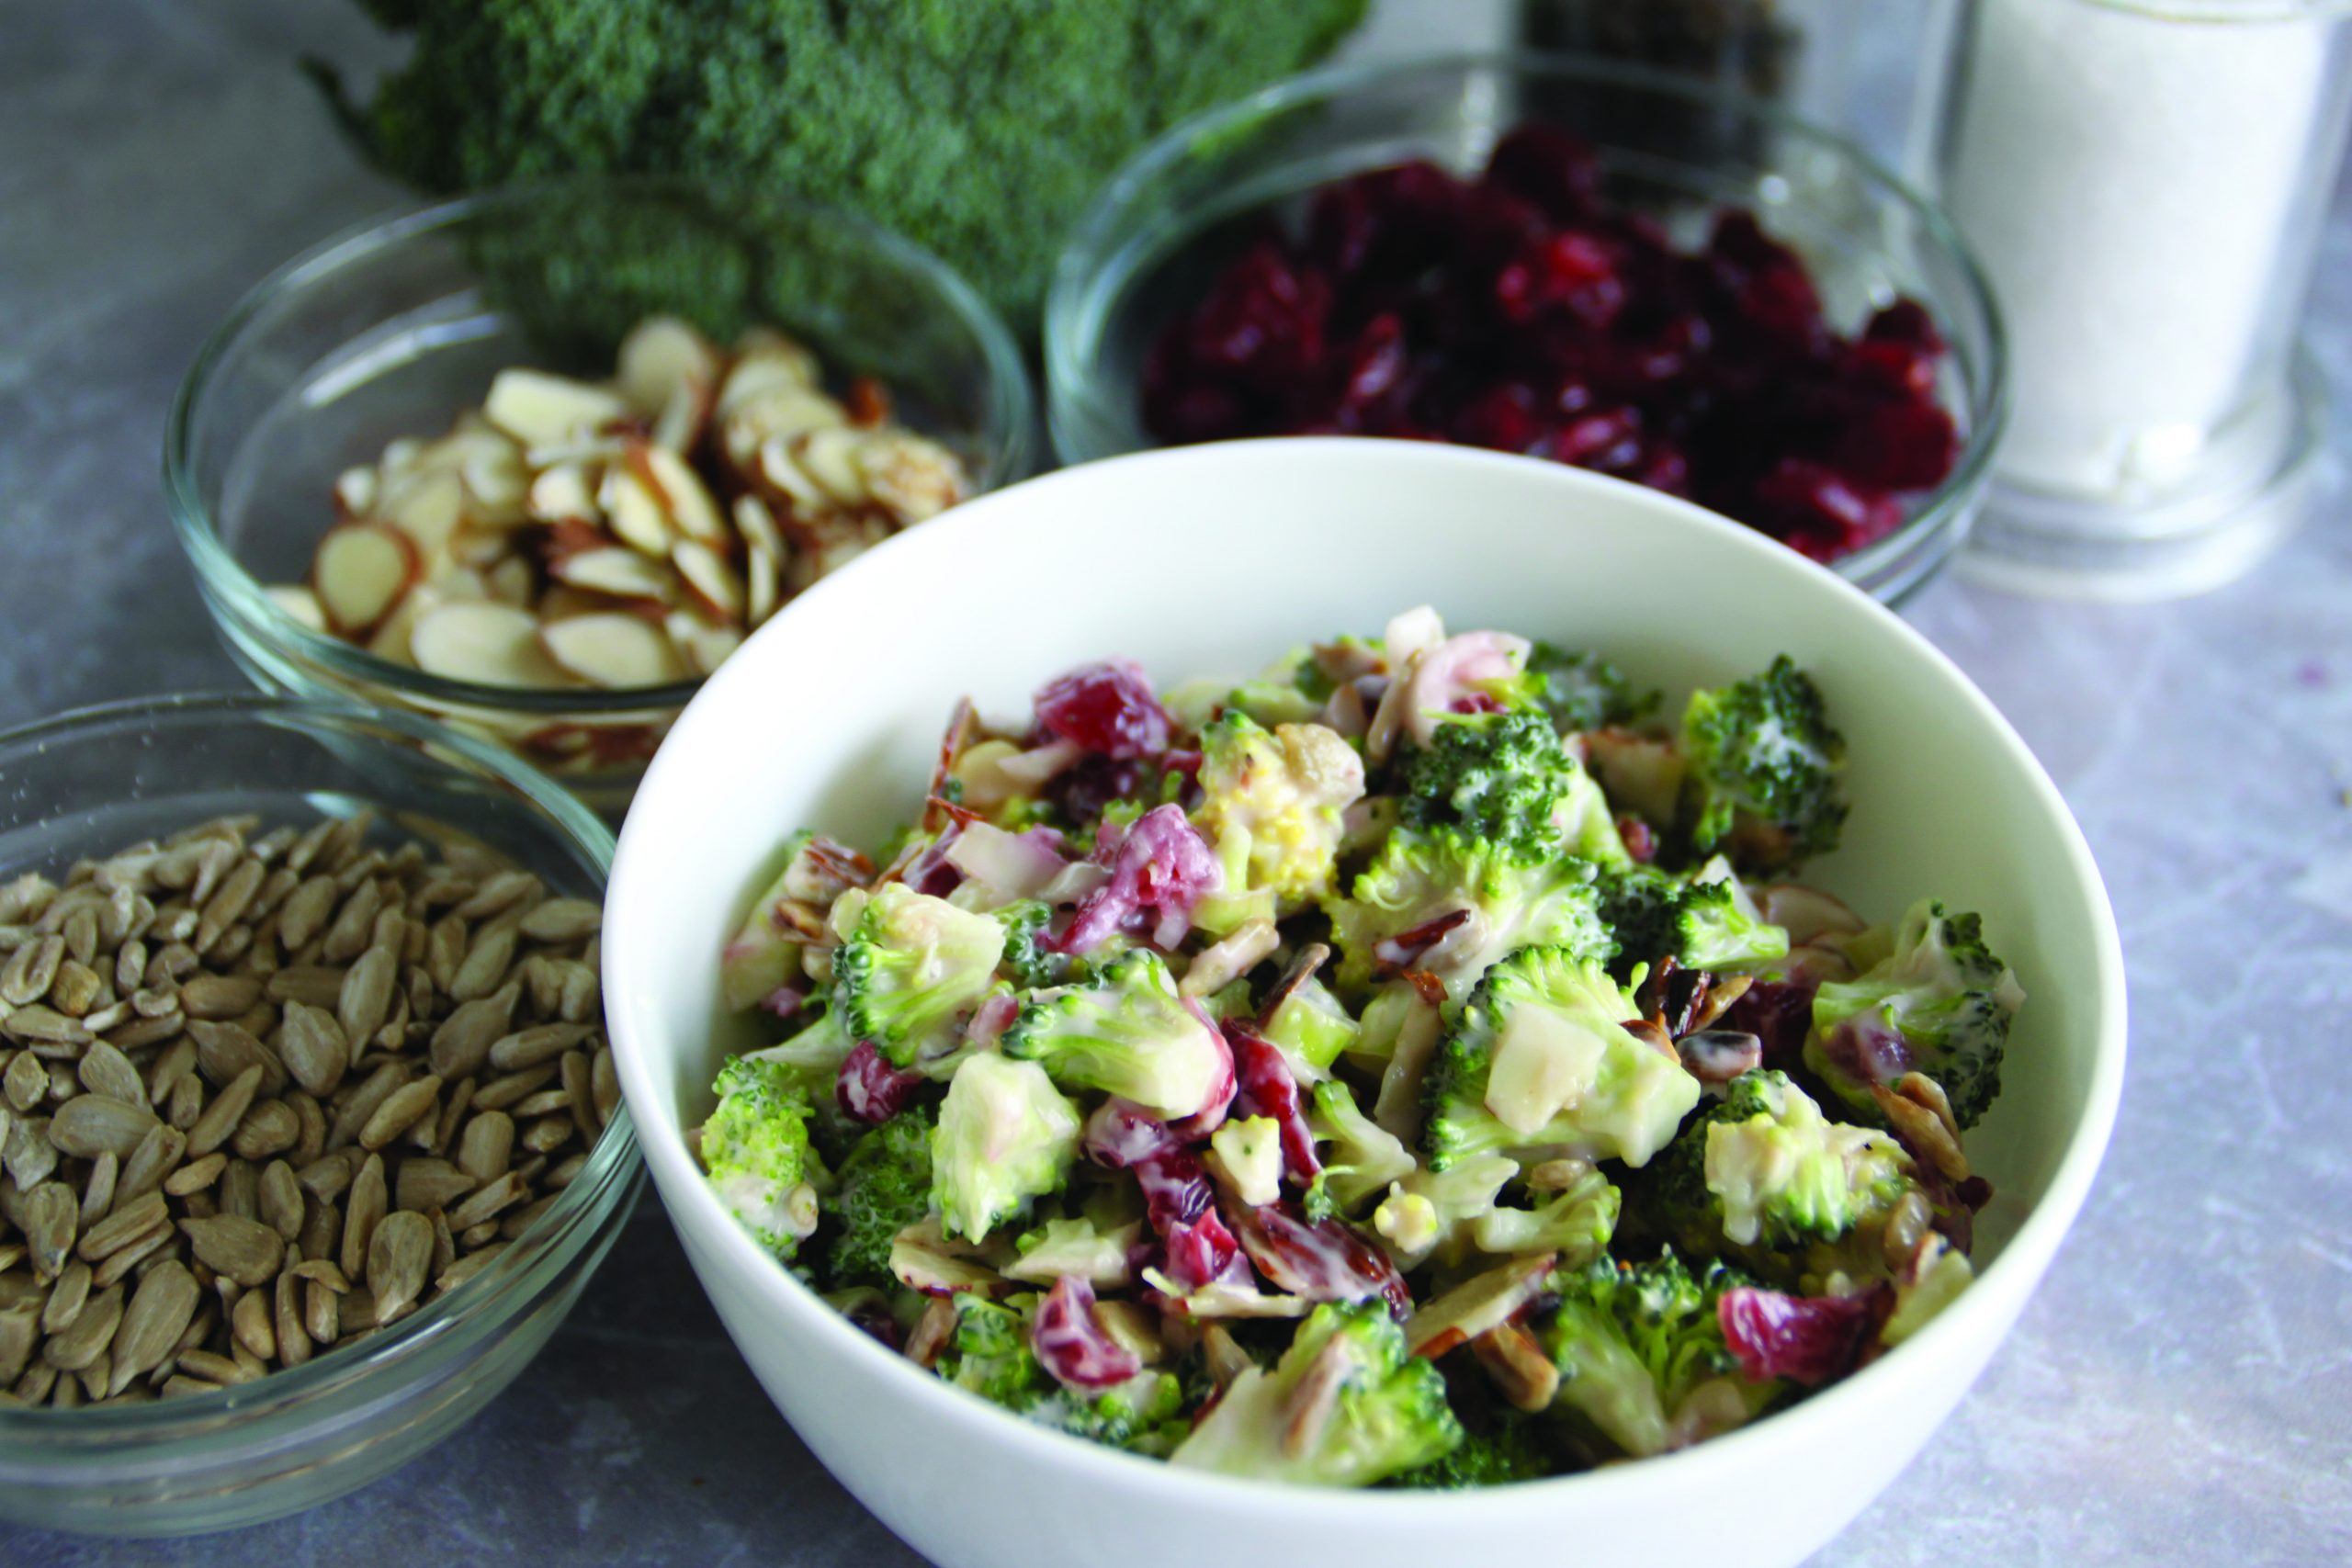 Cranberry Broccoli salad